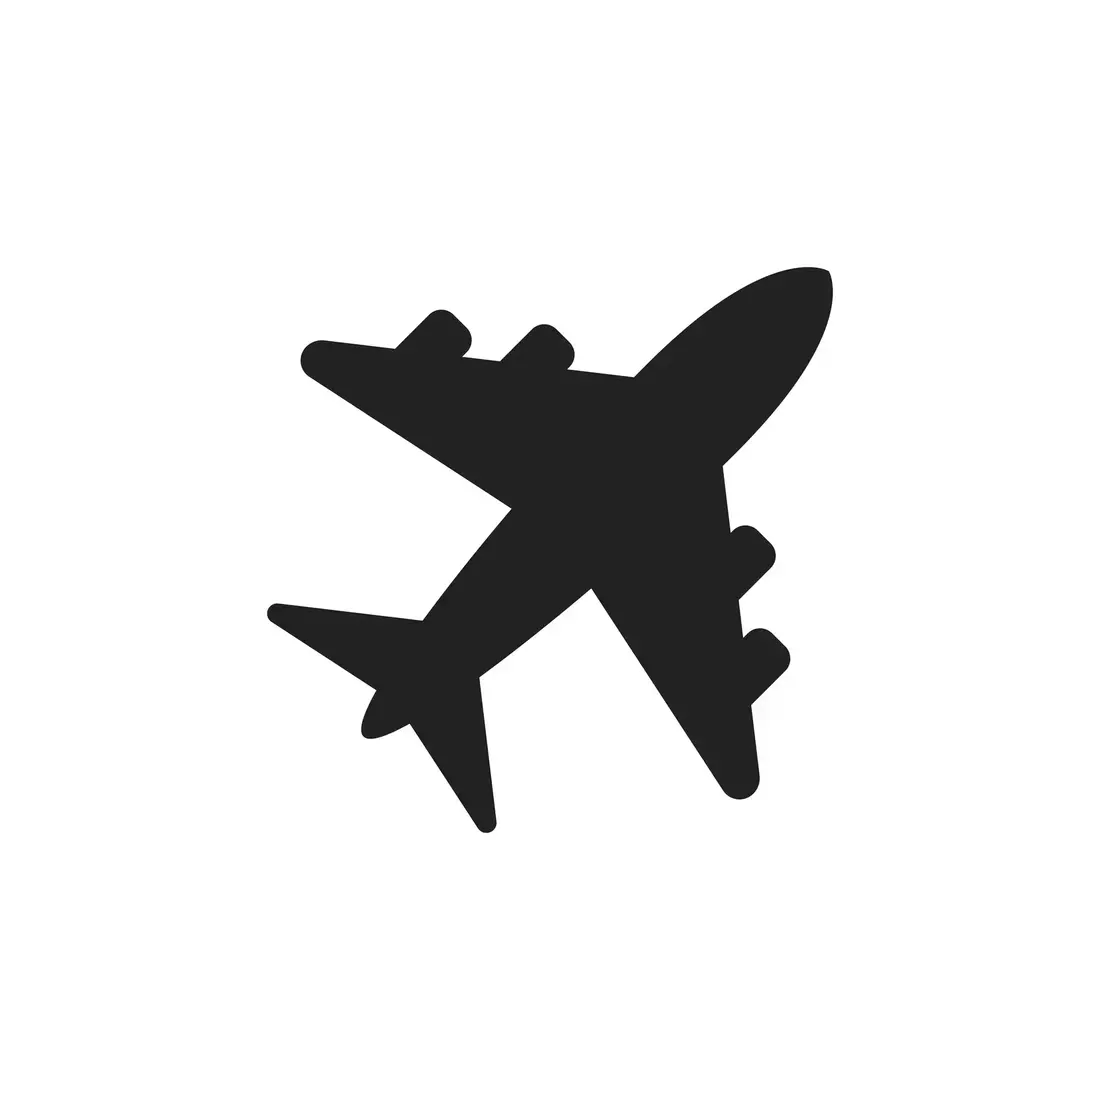 Aeroplane Sign Vector